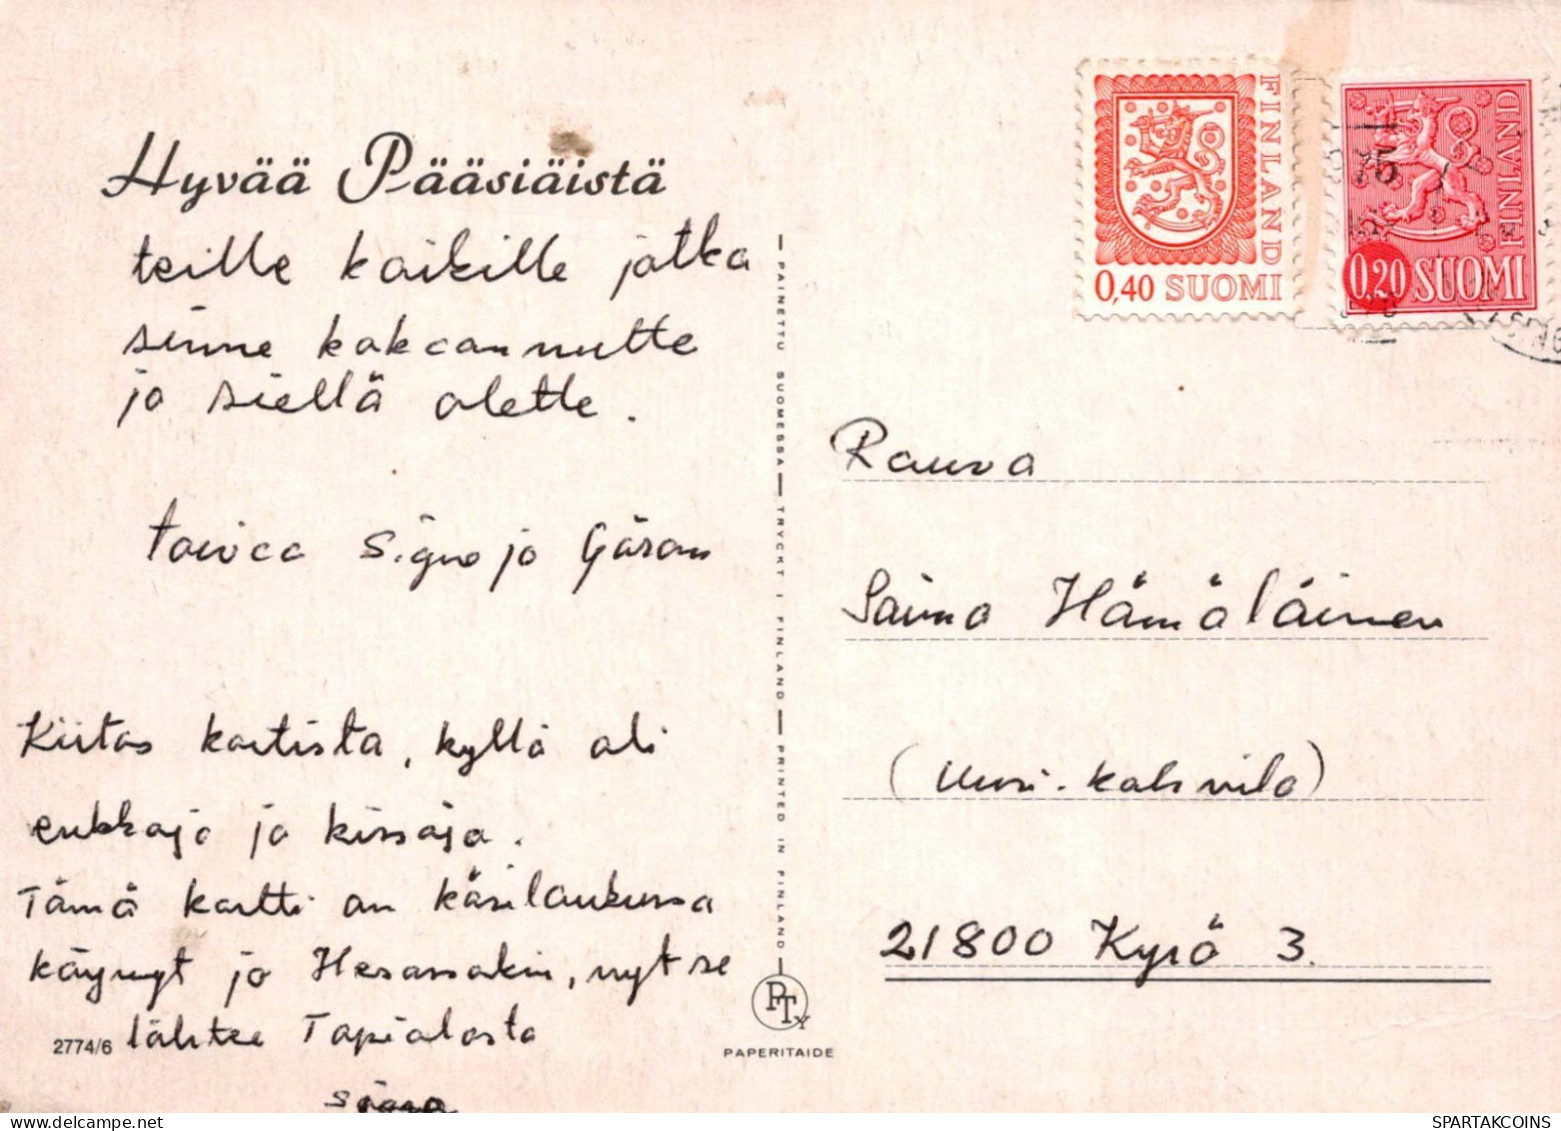 PASQUA POLLO UOVO Vintage Cartolina CPSM #PBP065.IT - Pâques